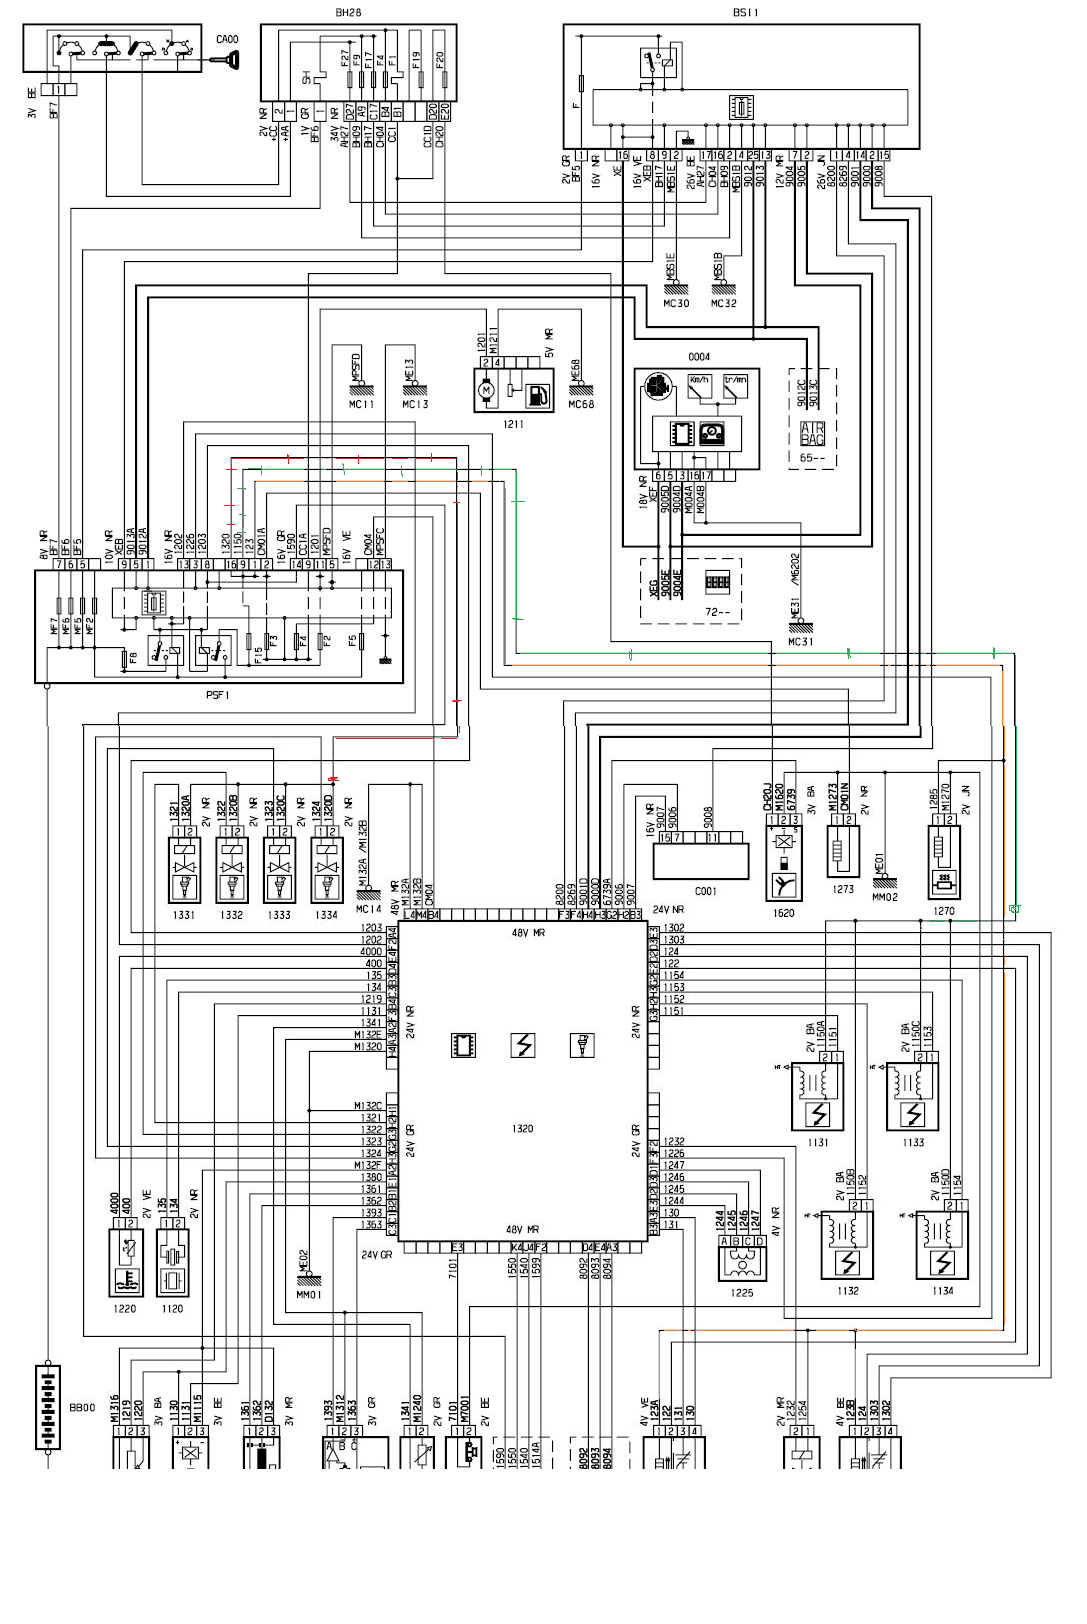 [DIAGRAM] Wiring Diagram Citroen C3 2013 Portugues FULL Version HD